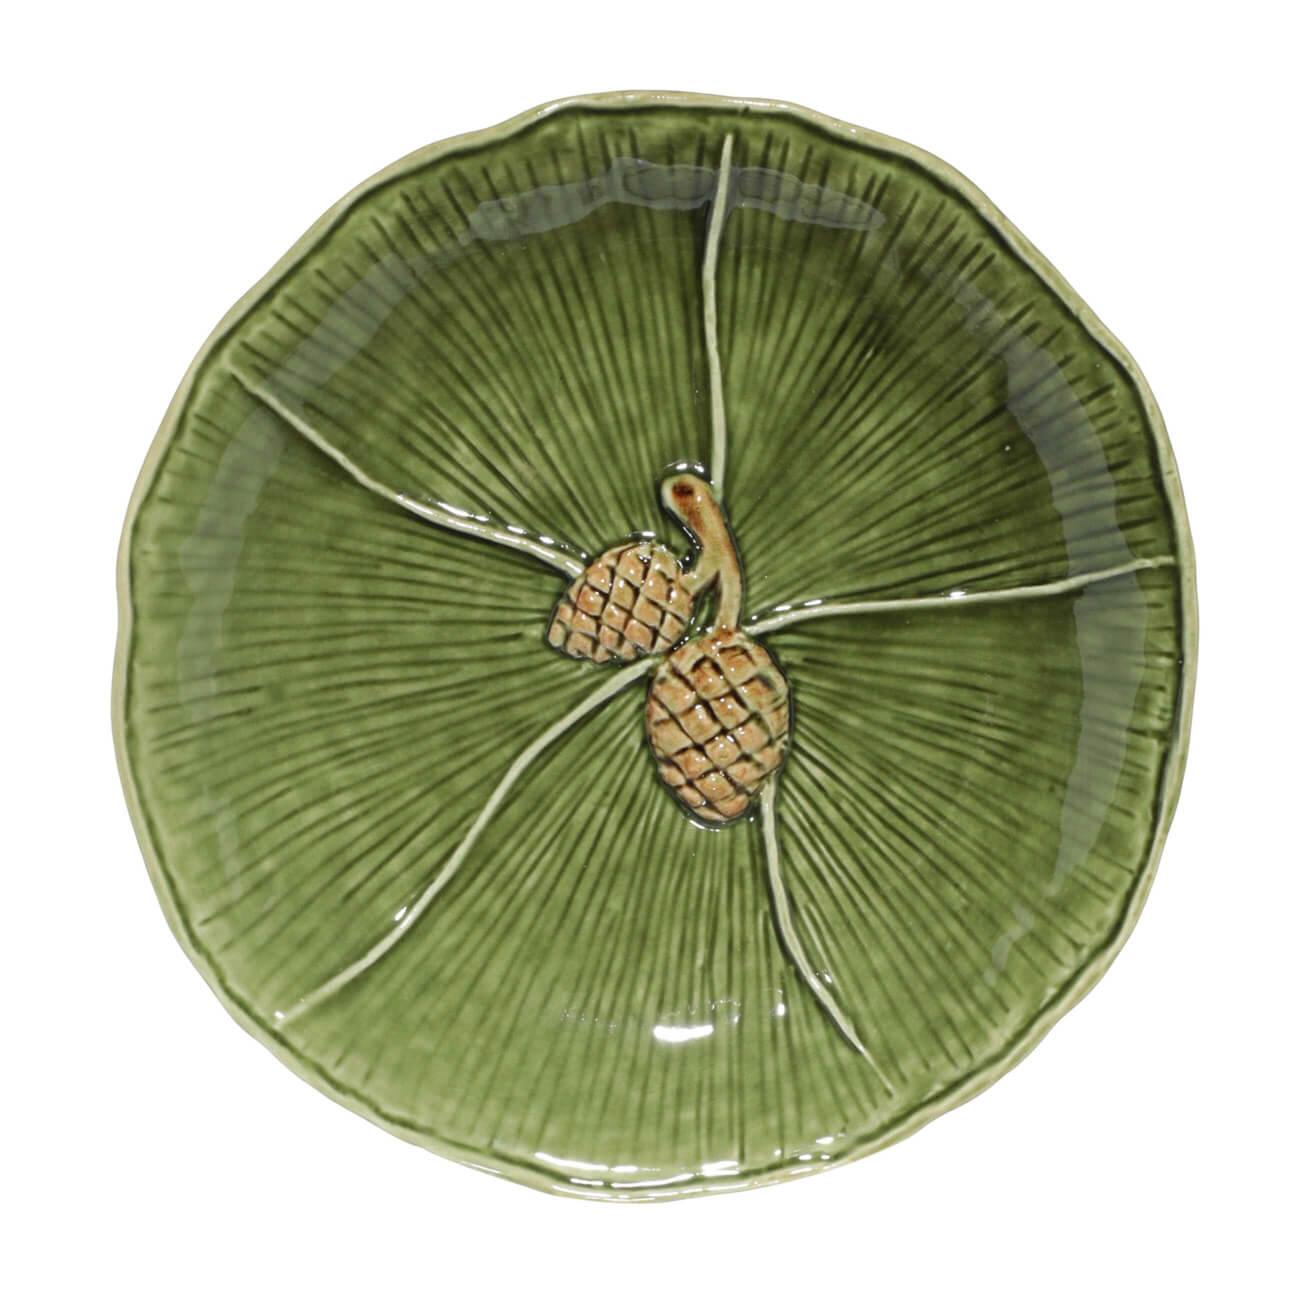 Блюдо, 19 см, керамика, зеленое, Шишки на листе, Fir cone блюдо 26 см керамика круглое зеленое шишки на листе fir cone